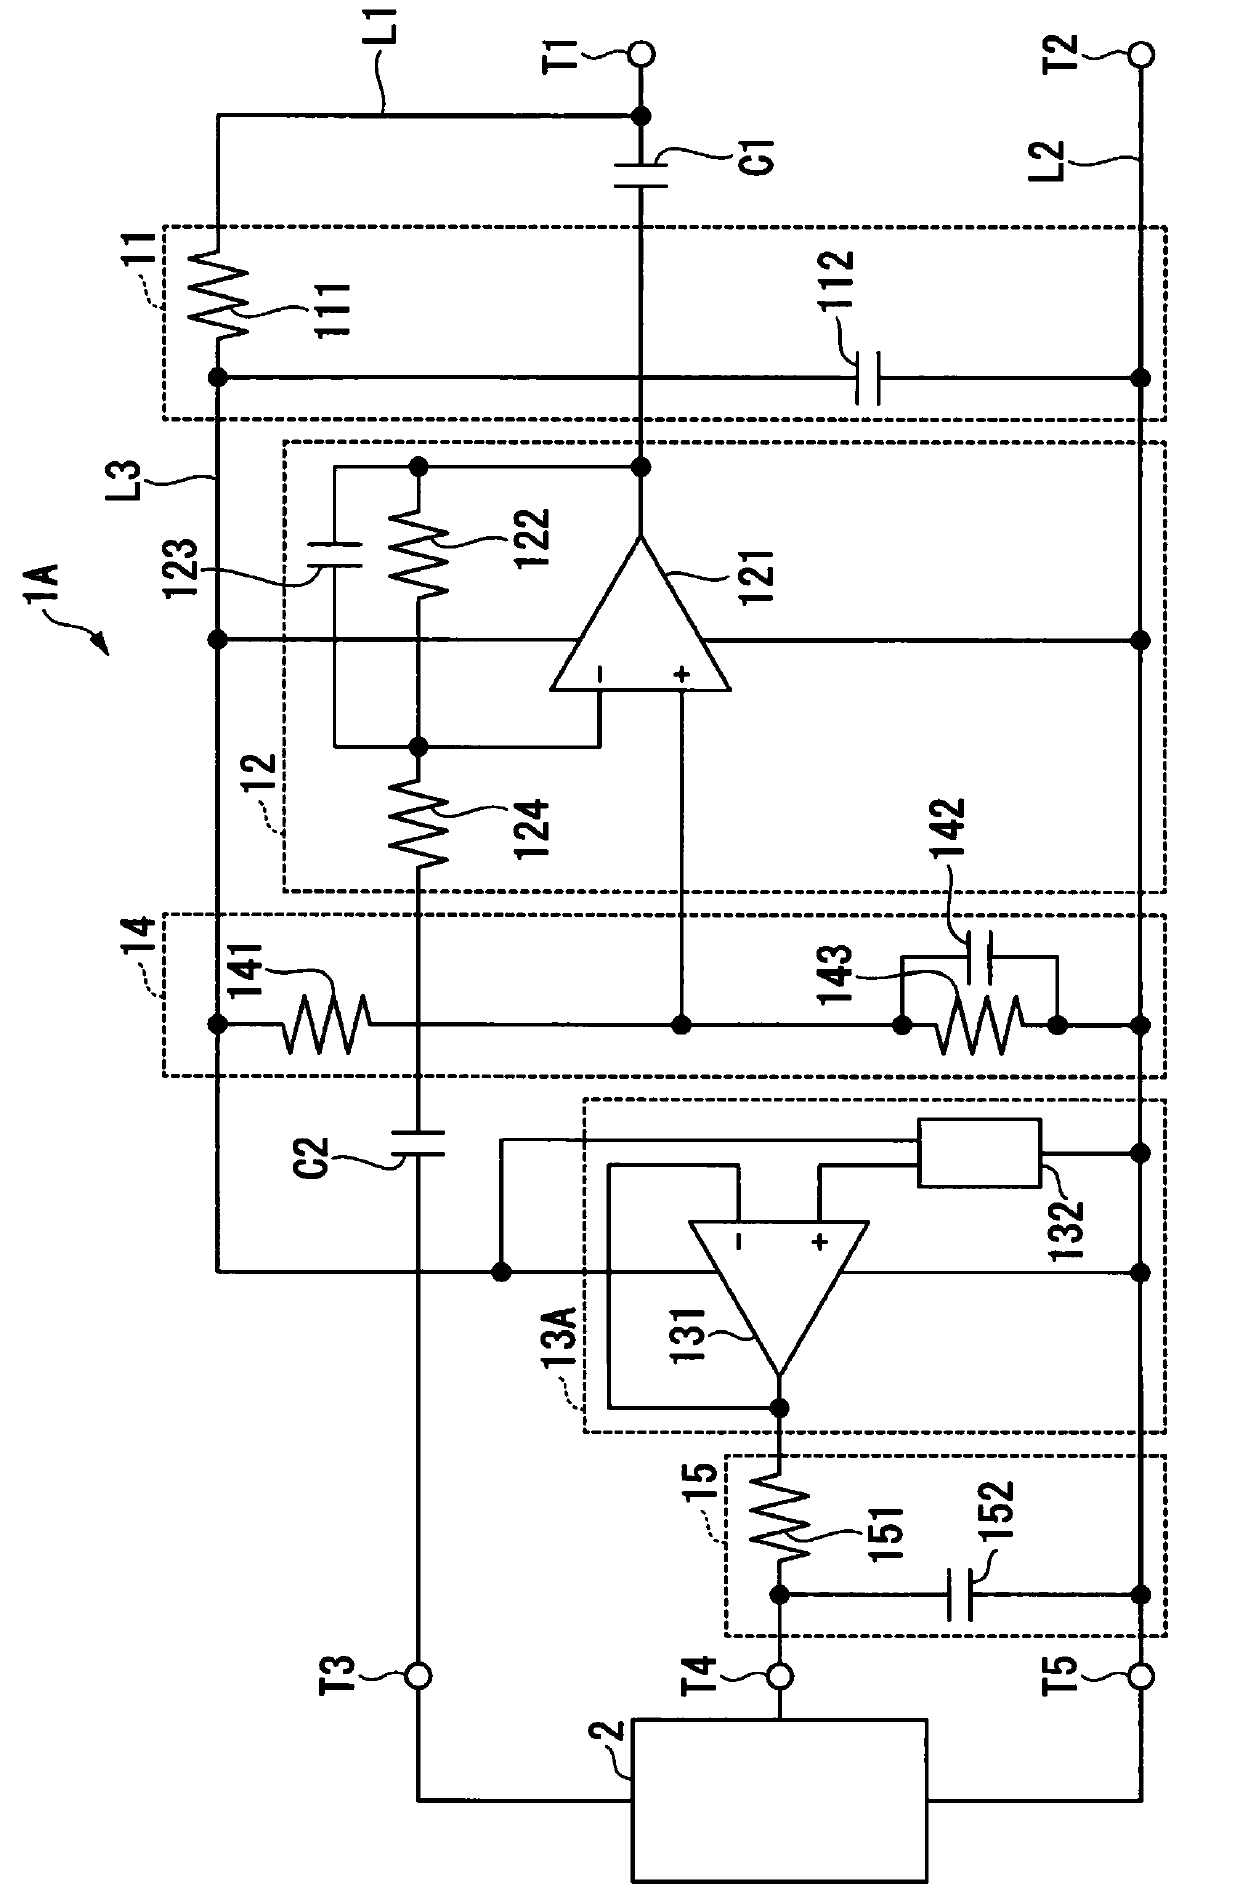 Signal transmission circuit and signal transmission method